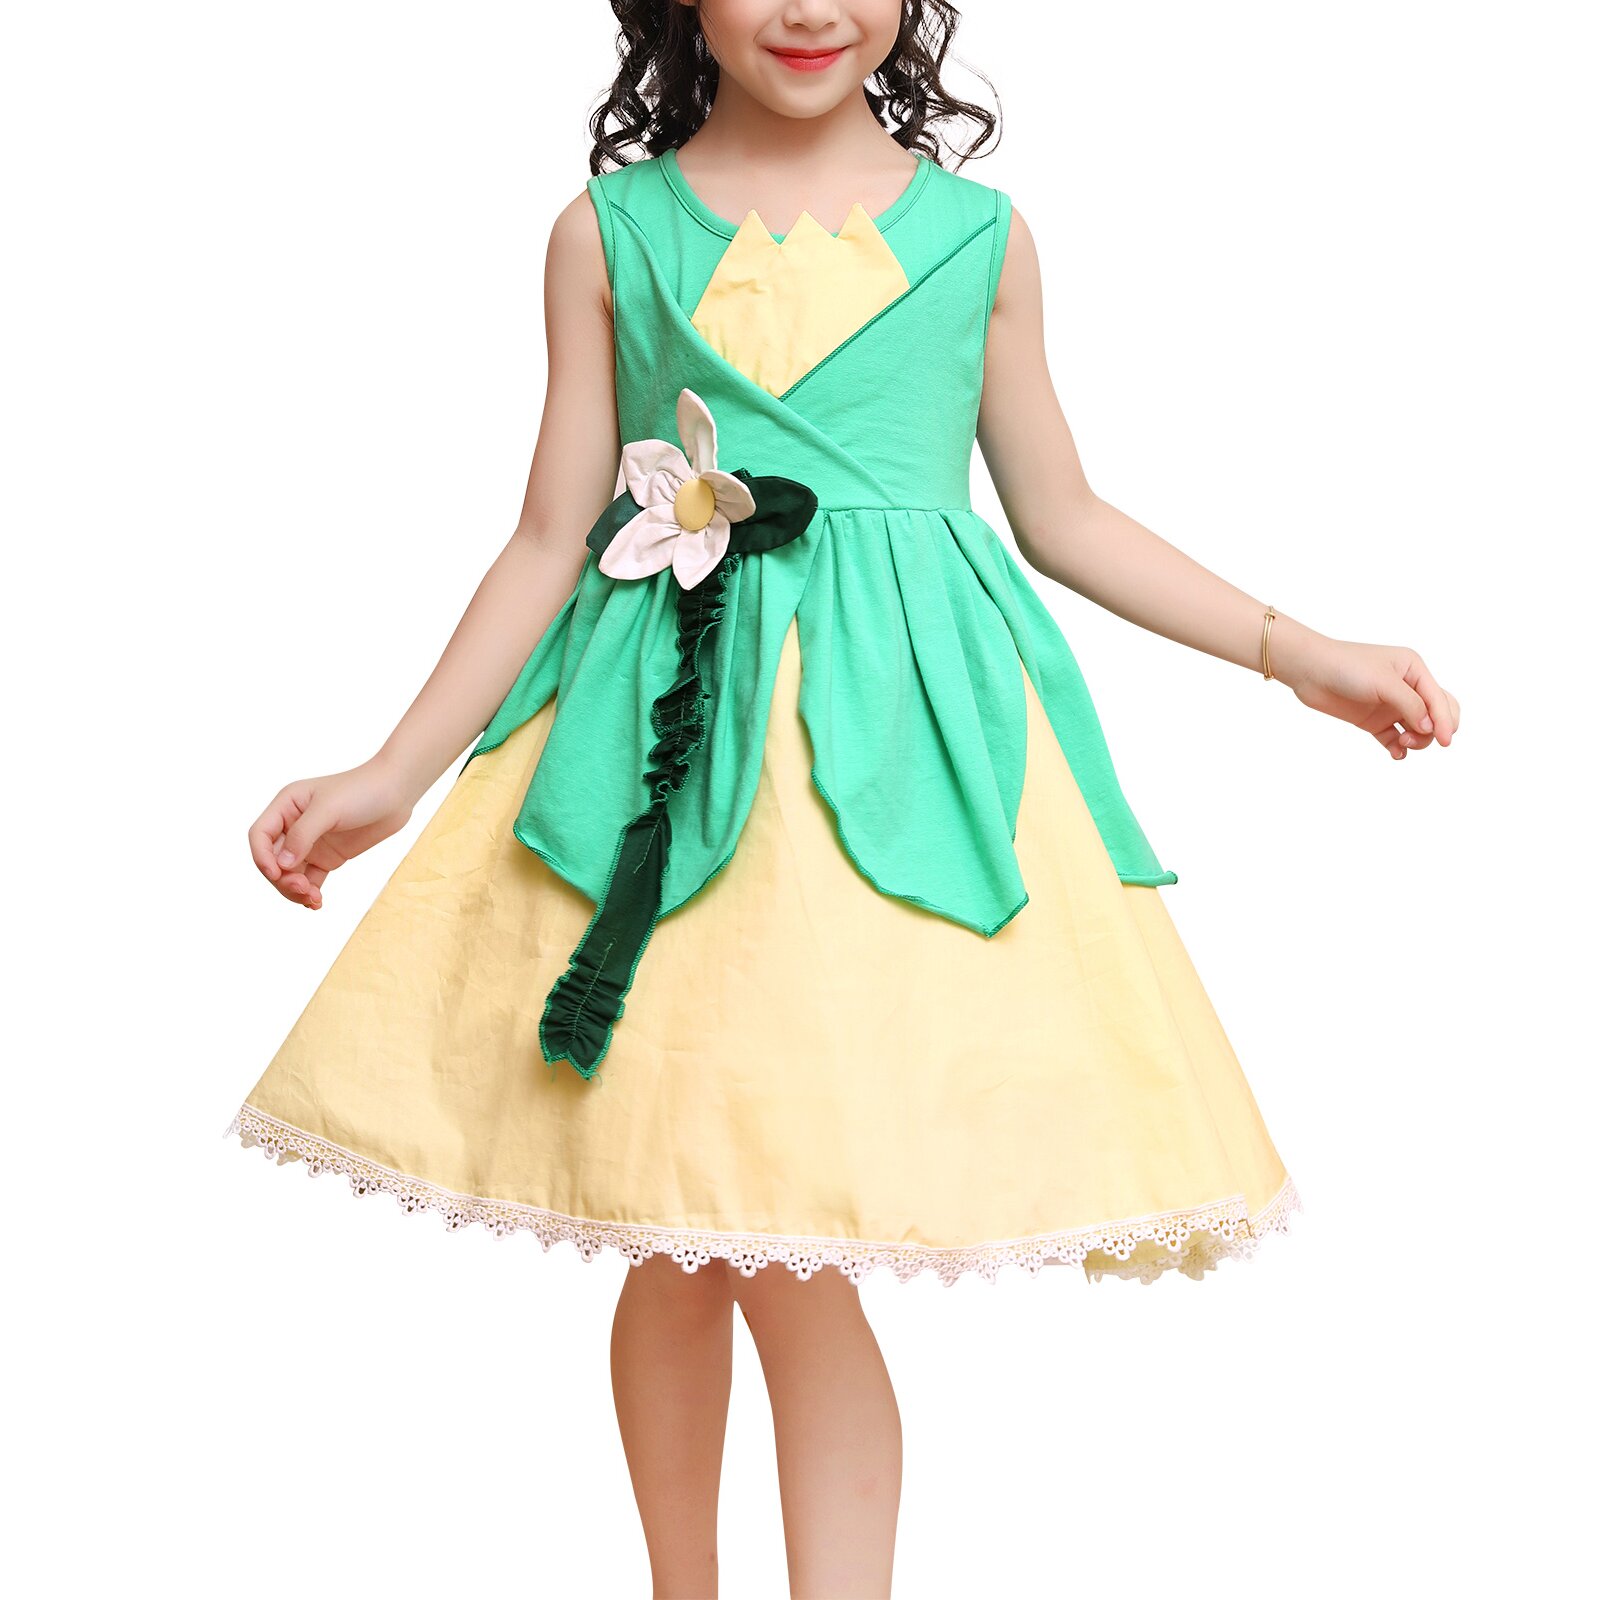 Jurebecia  Tian Princess Girls Green Fairy Frog Dress Costume Birthday Party Fancy Dresses Kids Halloween Outfits